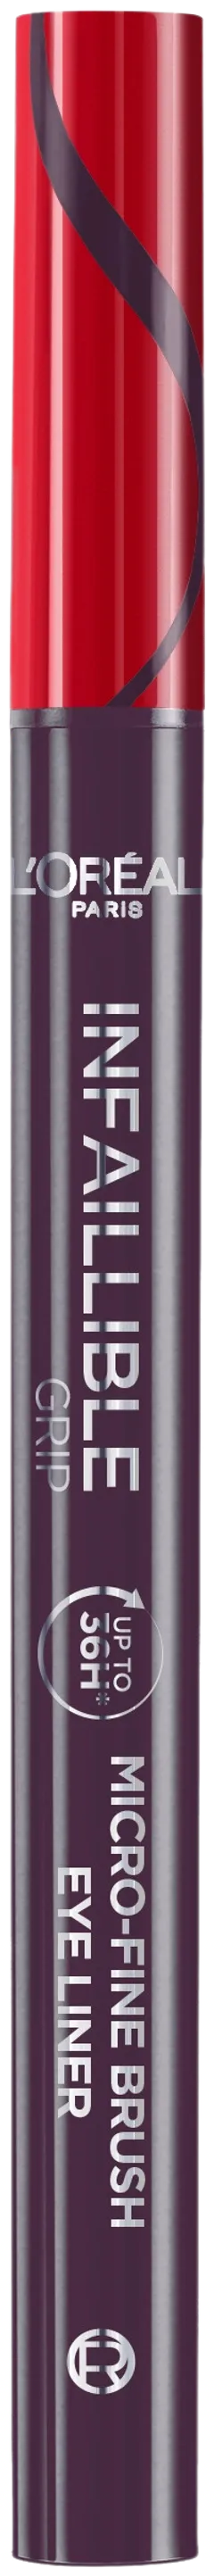 L'Oréal Paris Infaillible Grip 36H Micro-Fine eyeliner 04 Dew Berry nestemäinen silmänrajausväri 0,4g - 04 Dew Berry - 2